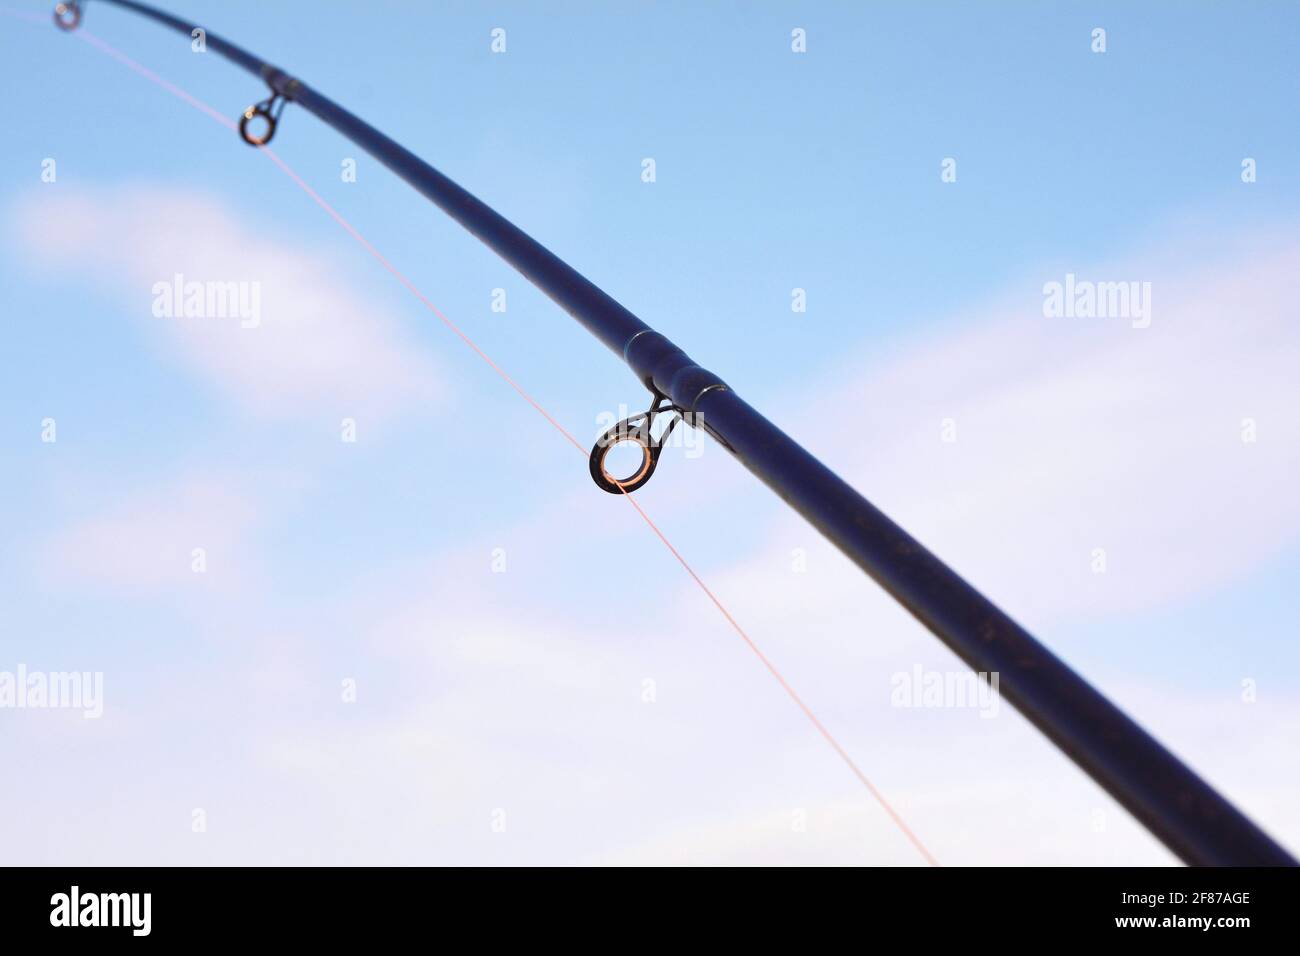 https://c8.alamy.com/comp/2F87AGE/ishing-reel-on-the-rod-fishing-on-the-feeder-carp-fishing-rods-with-carp-bite-indicators-and-reels-set-up-on-rod-pod-near-lake-river-2F87AGE.jpg